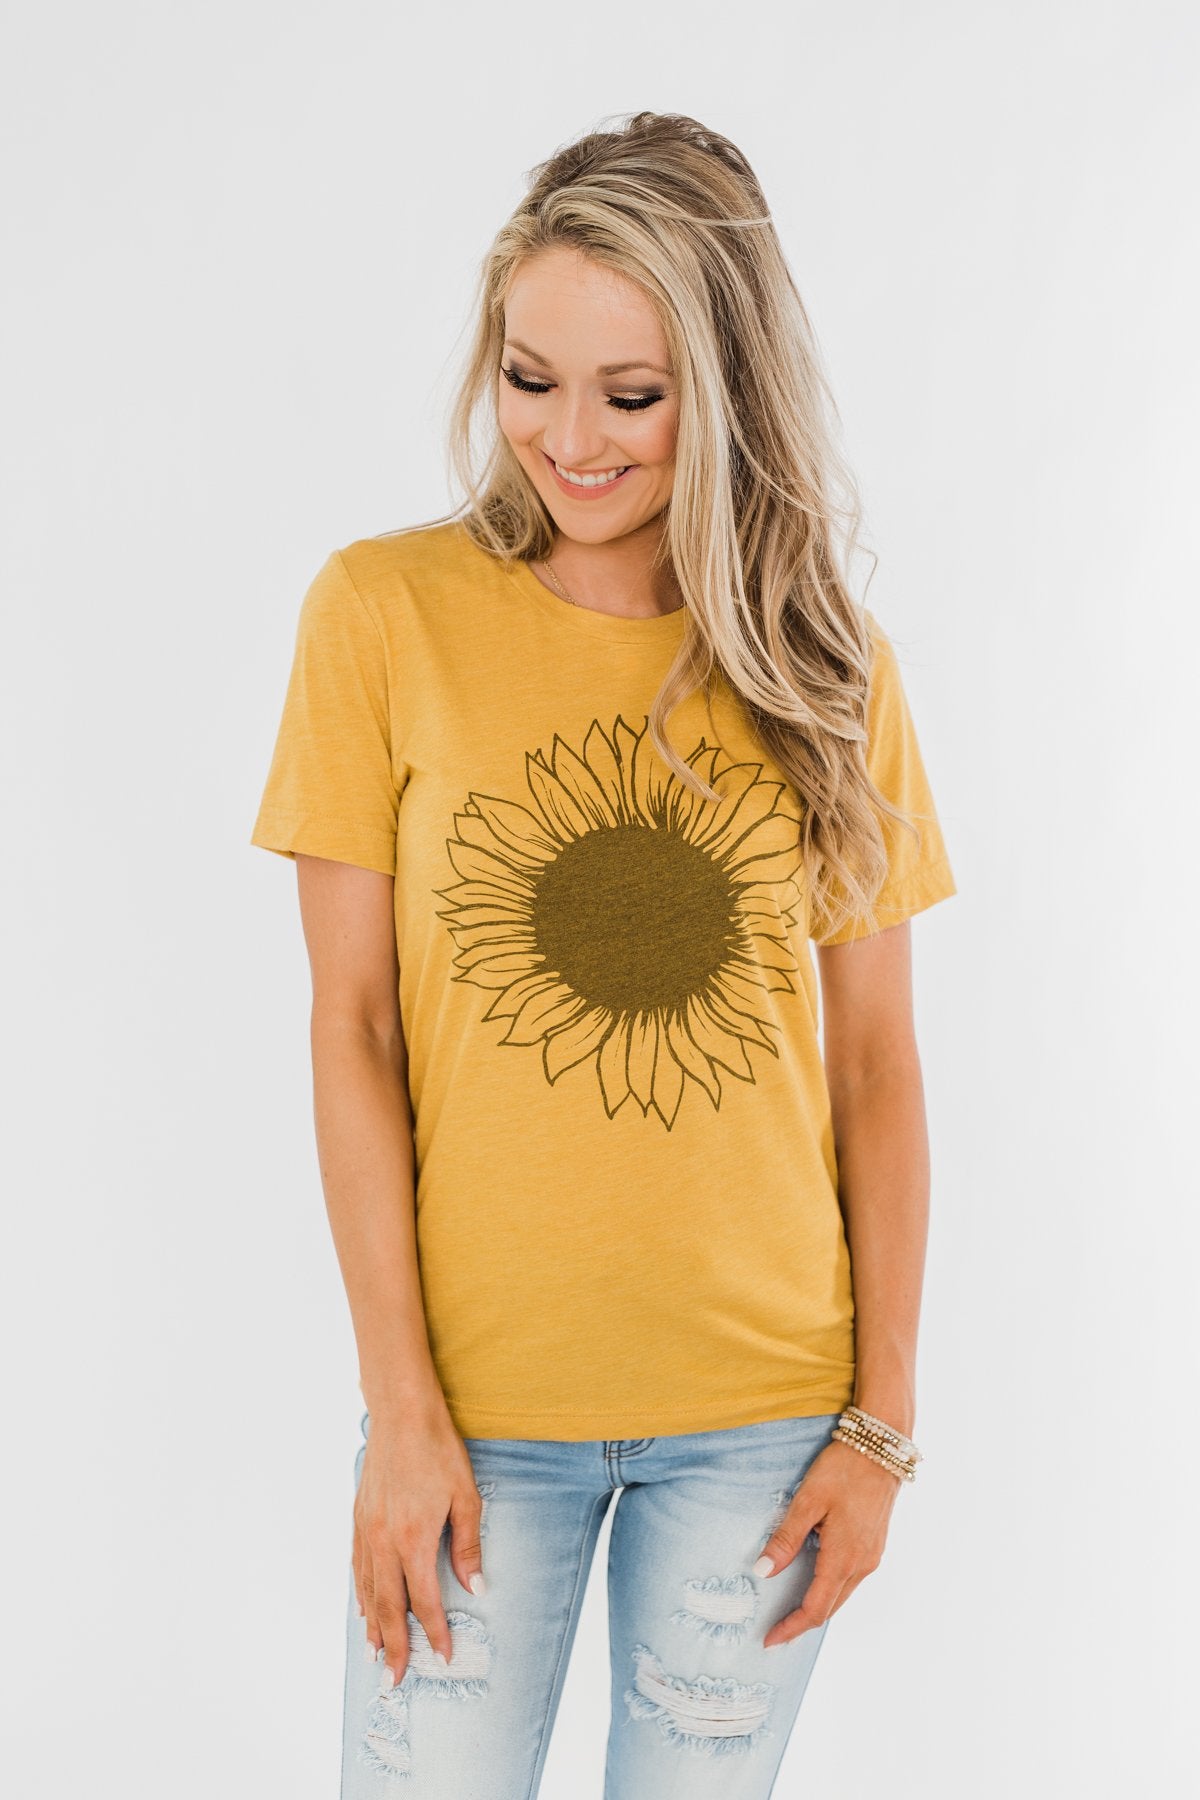 Simple Sunflower Graphic Tee- Yellow